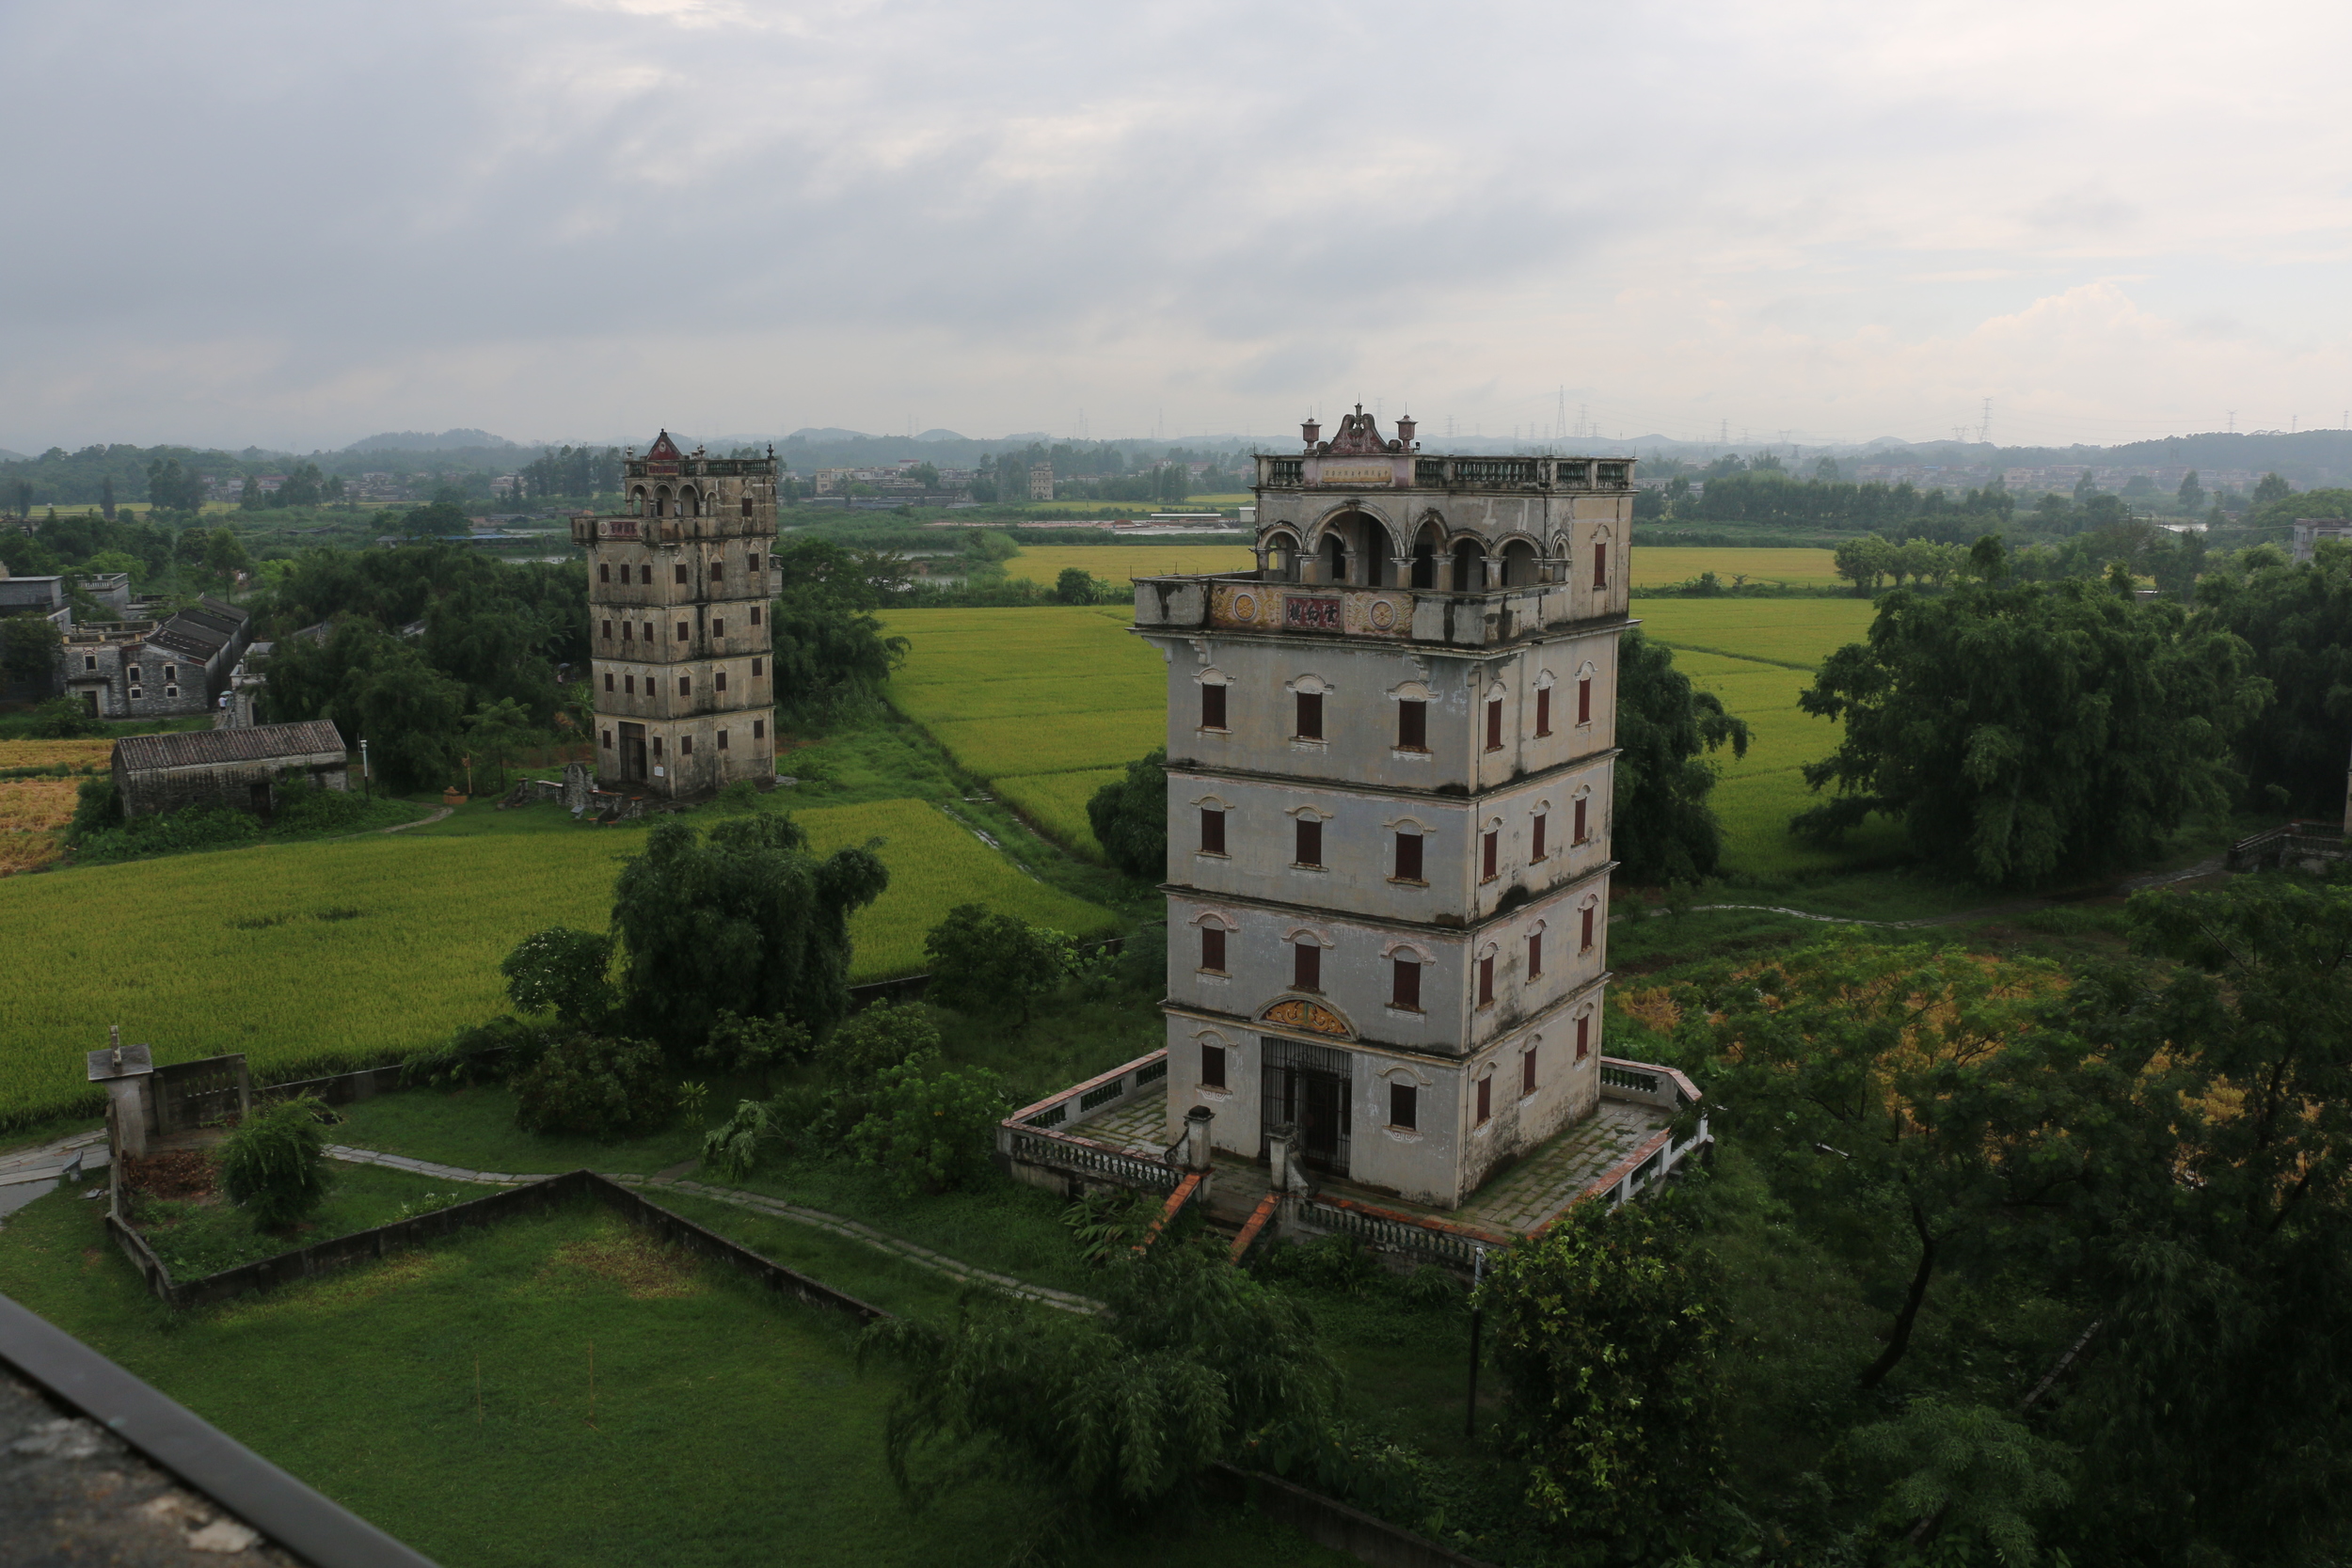 Kaiping watchtowers